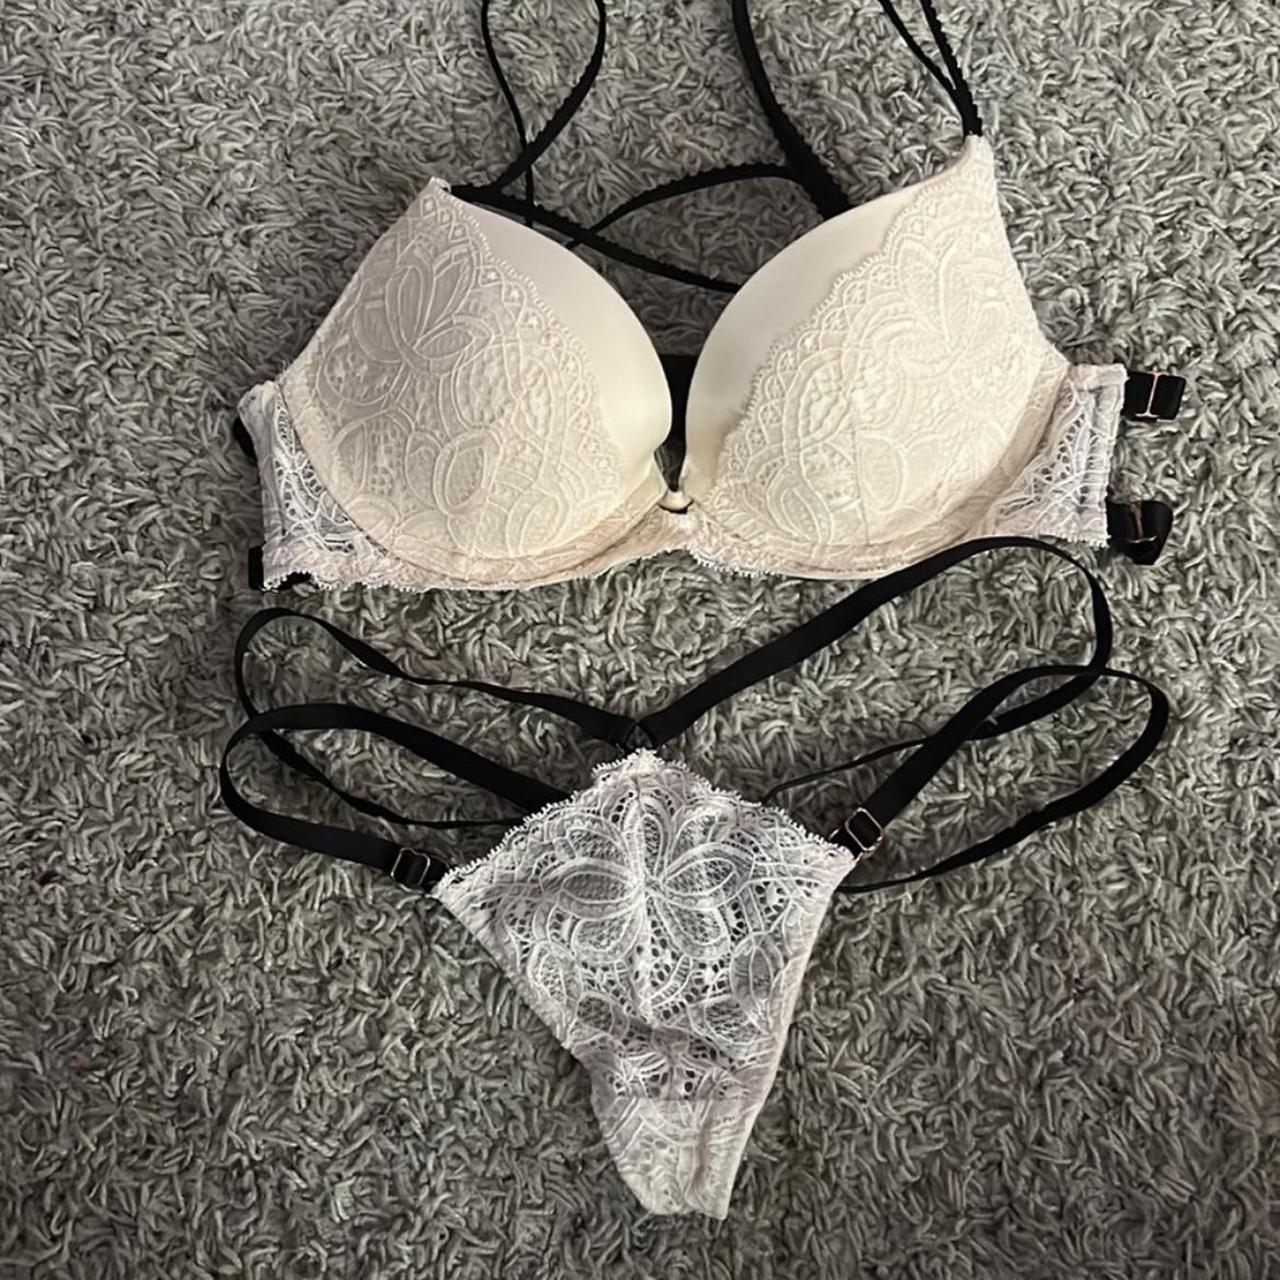 Victoria’s Secret Very Sexy Matching set. Cream and